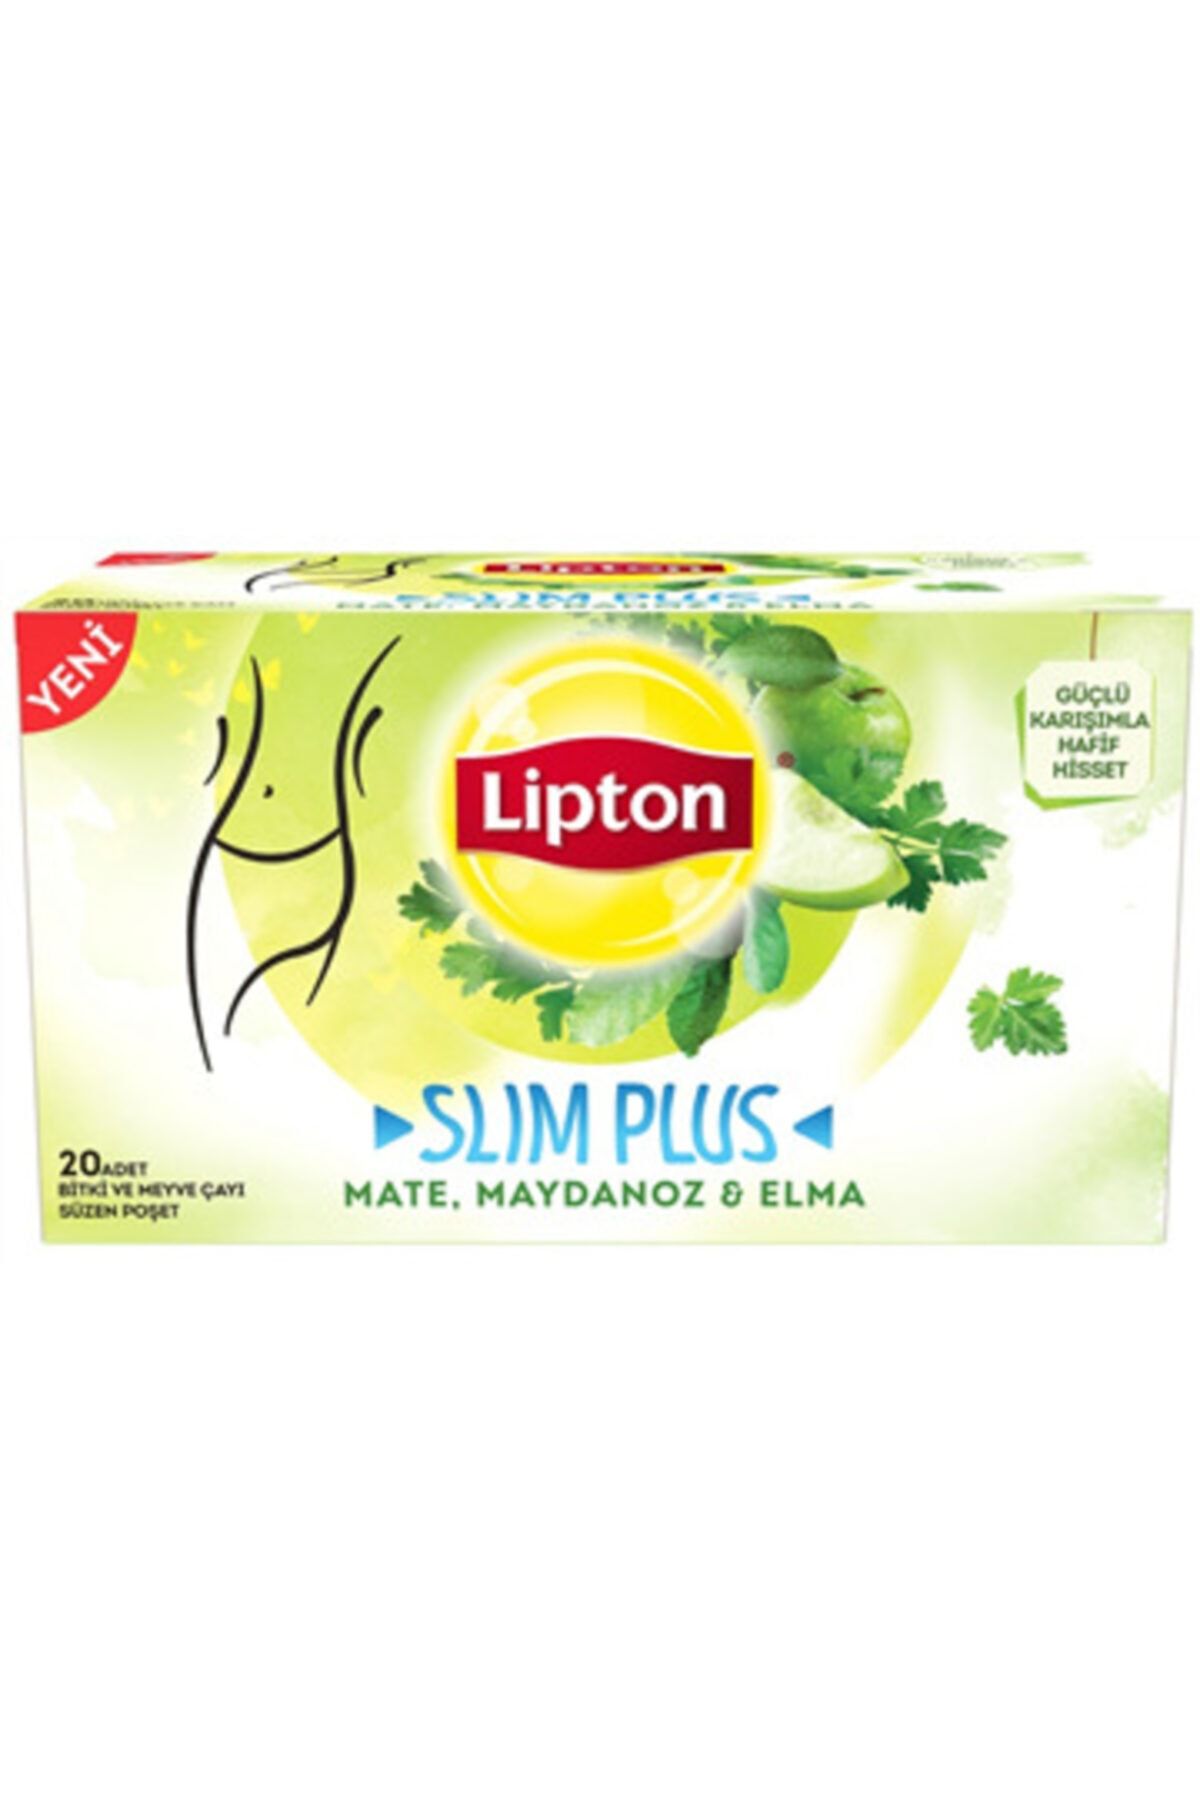 Lipton Slim Plus Mate, Maydonoz & Elma 20'Li Bardak Poşet  34 Gr